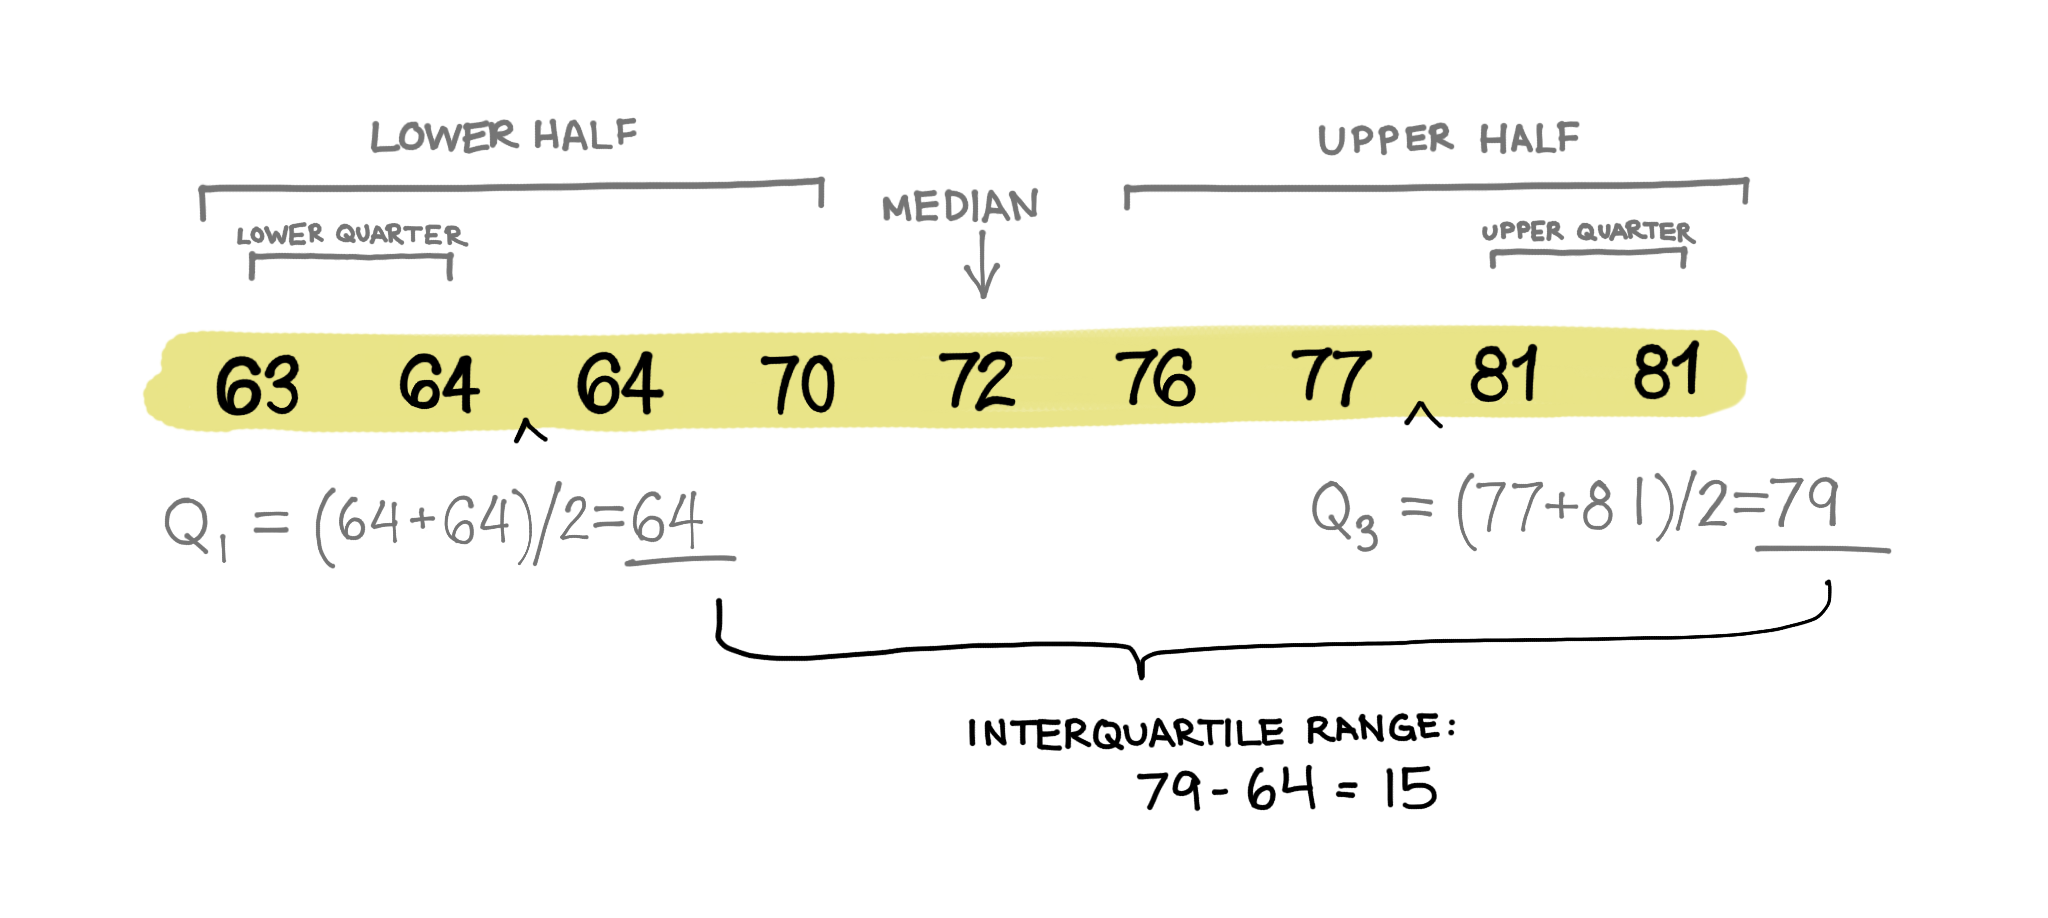 interquartile range definition math